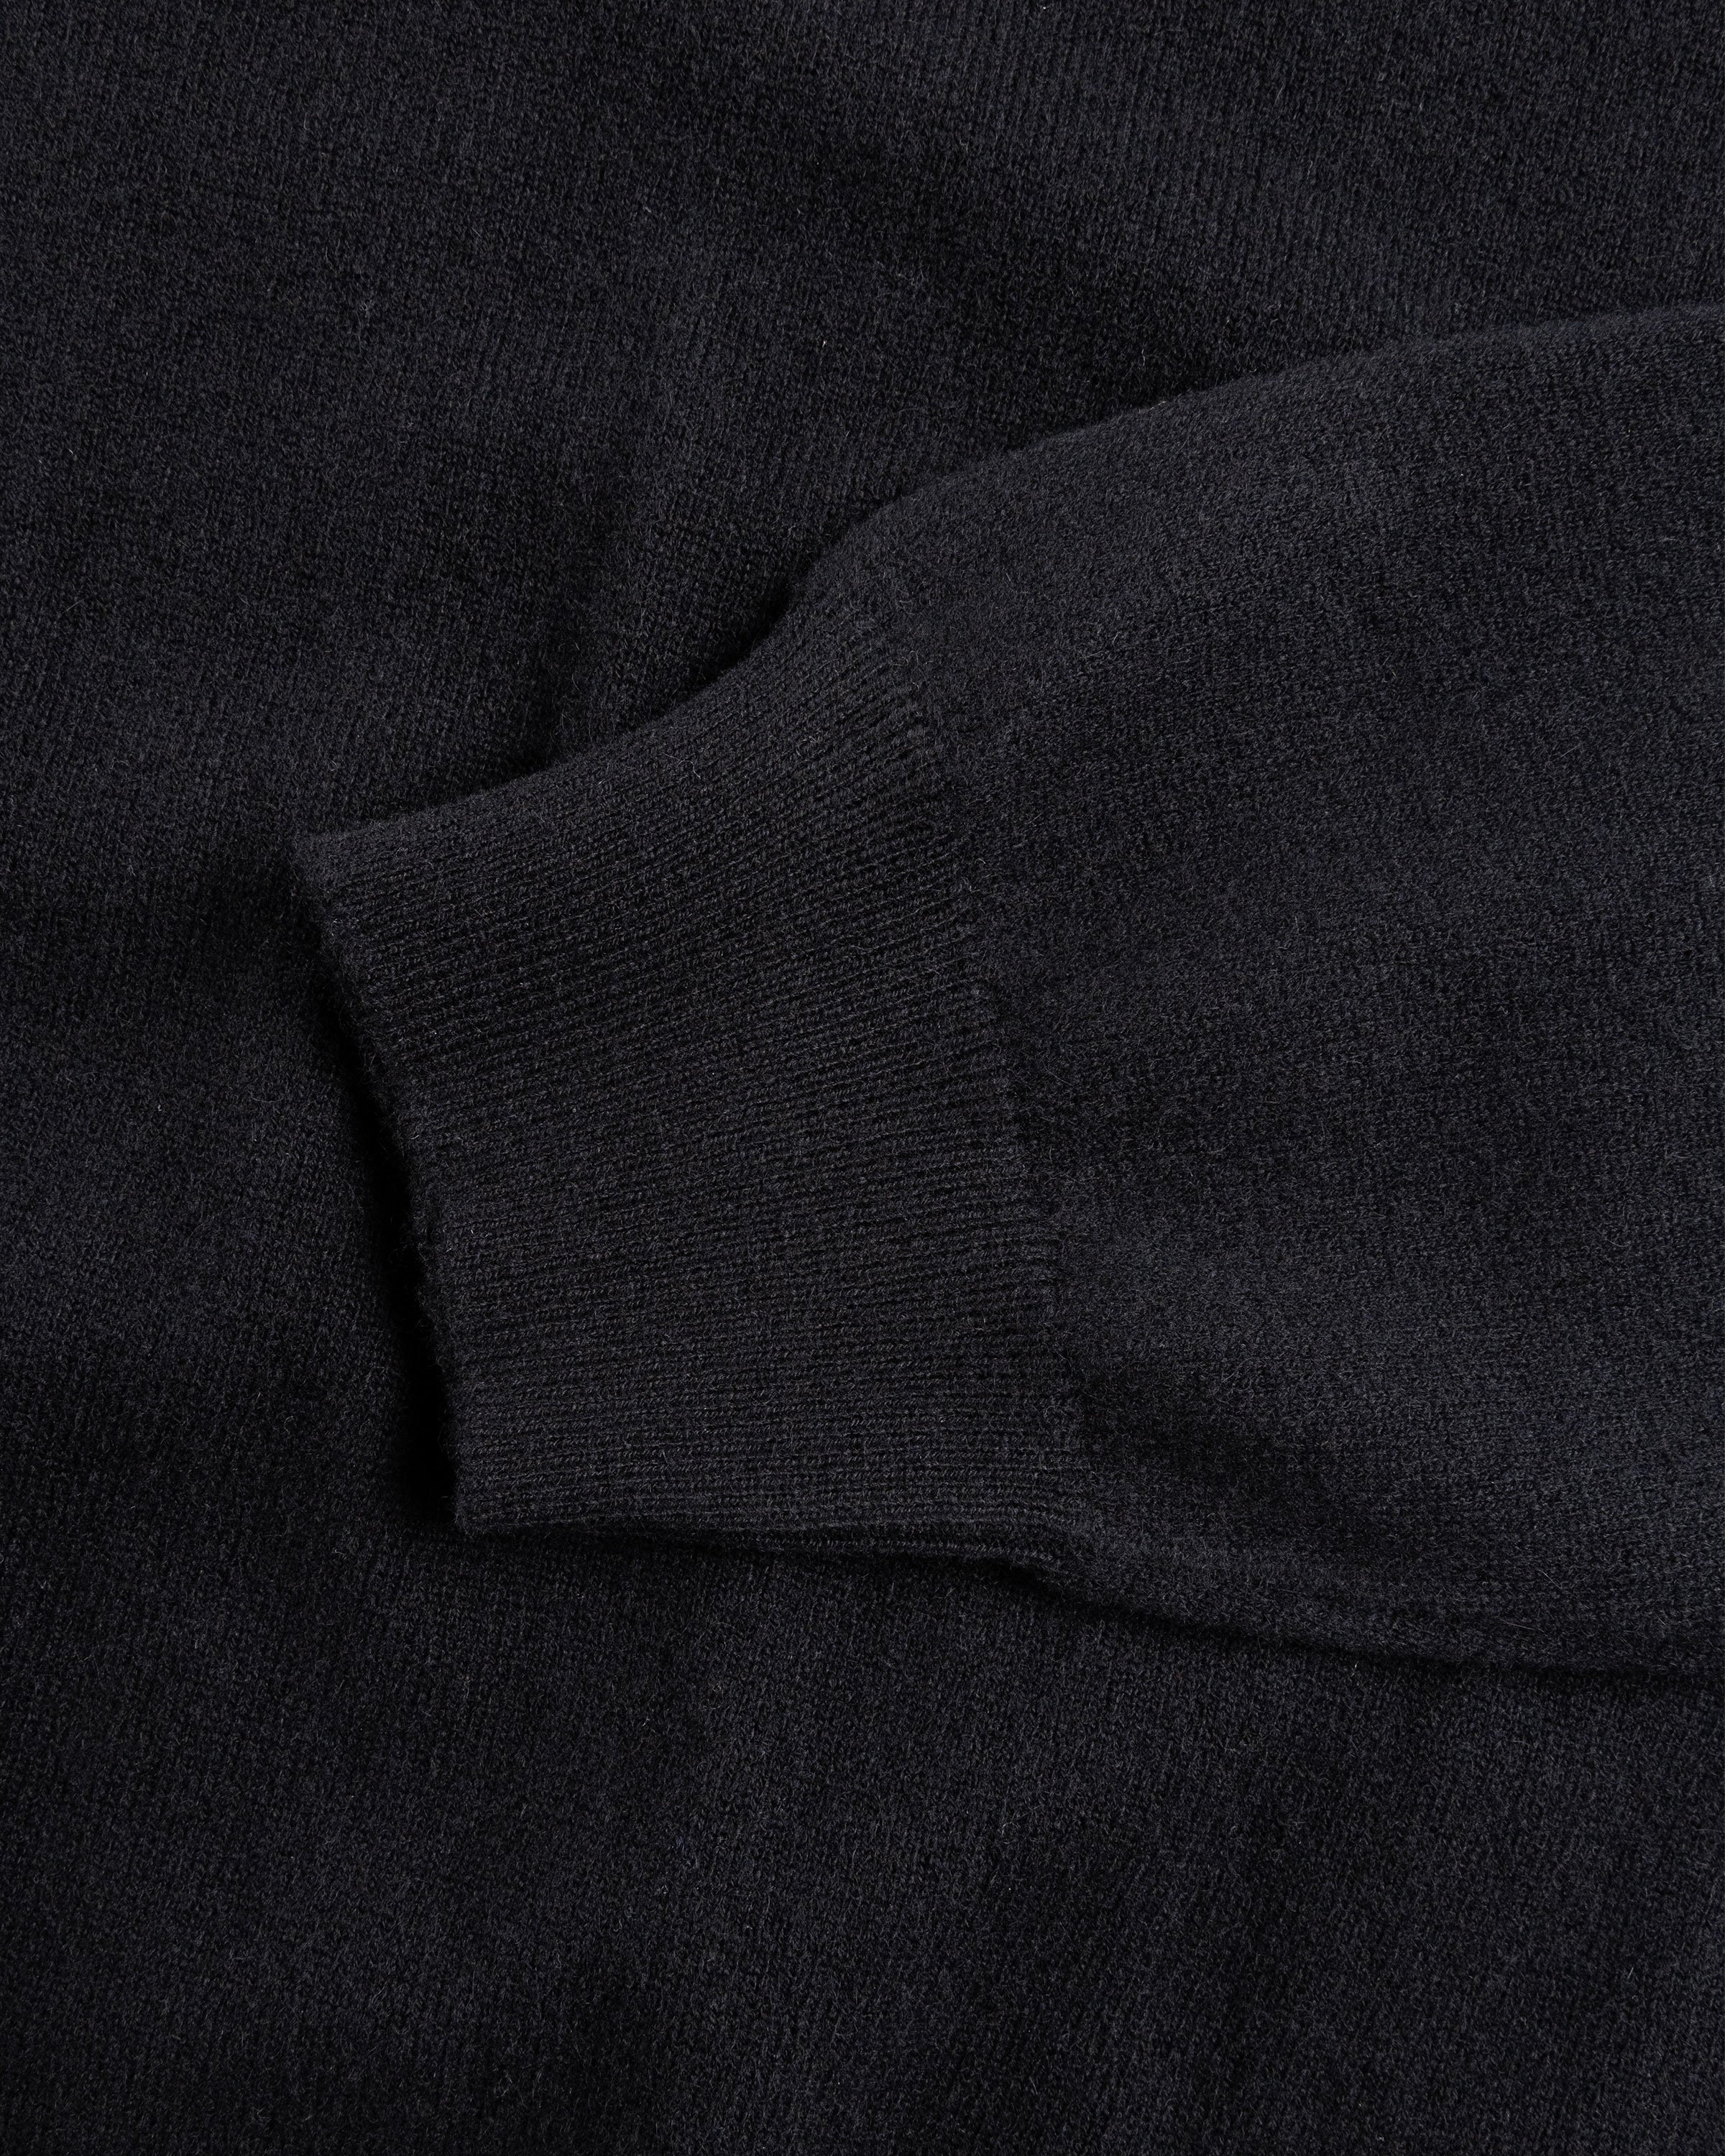 Highsnobiety HS05 - Cashmere Crew Sweater Black - Clothing - Black - Image 7